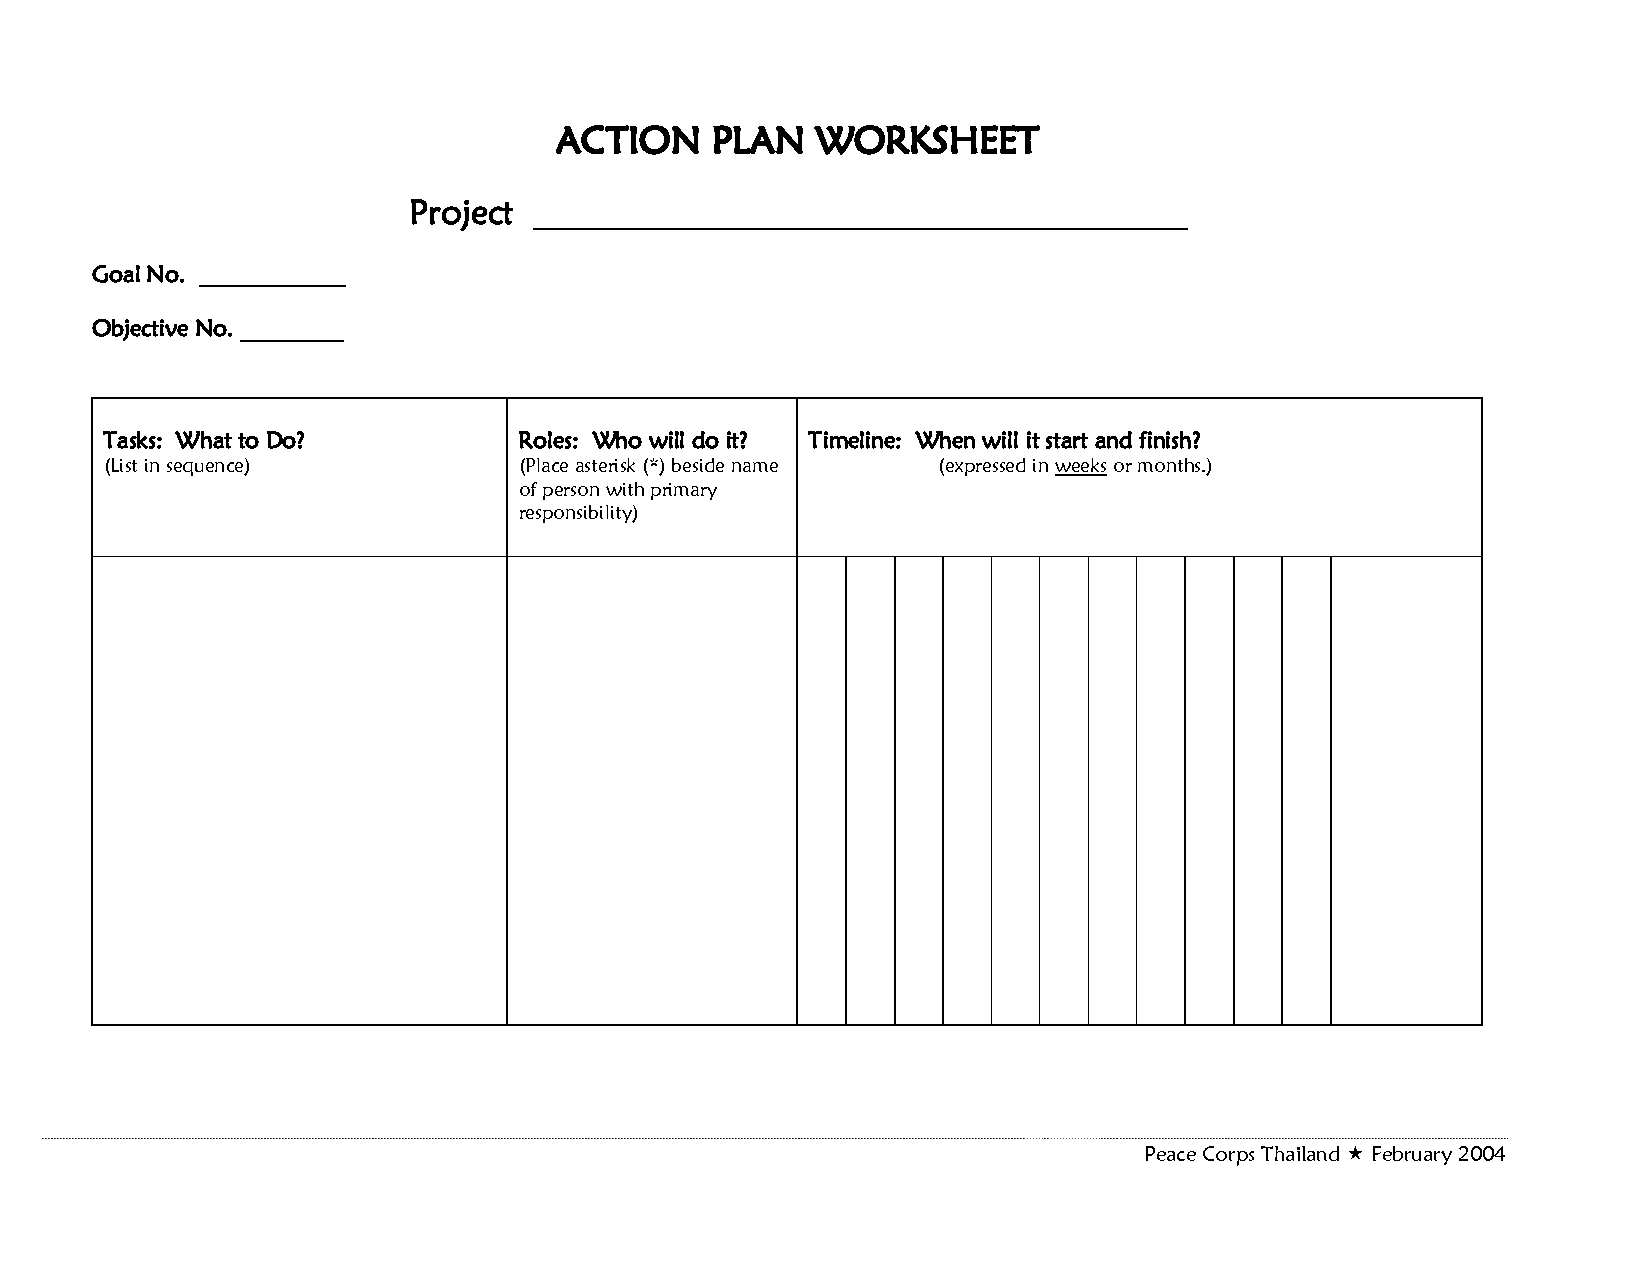 Action Plans and Goals Worksheet Image